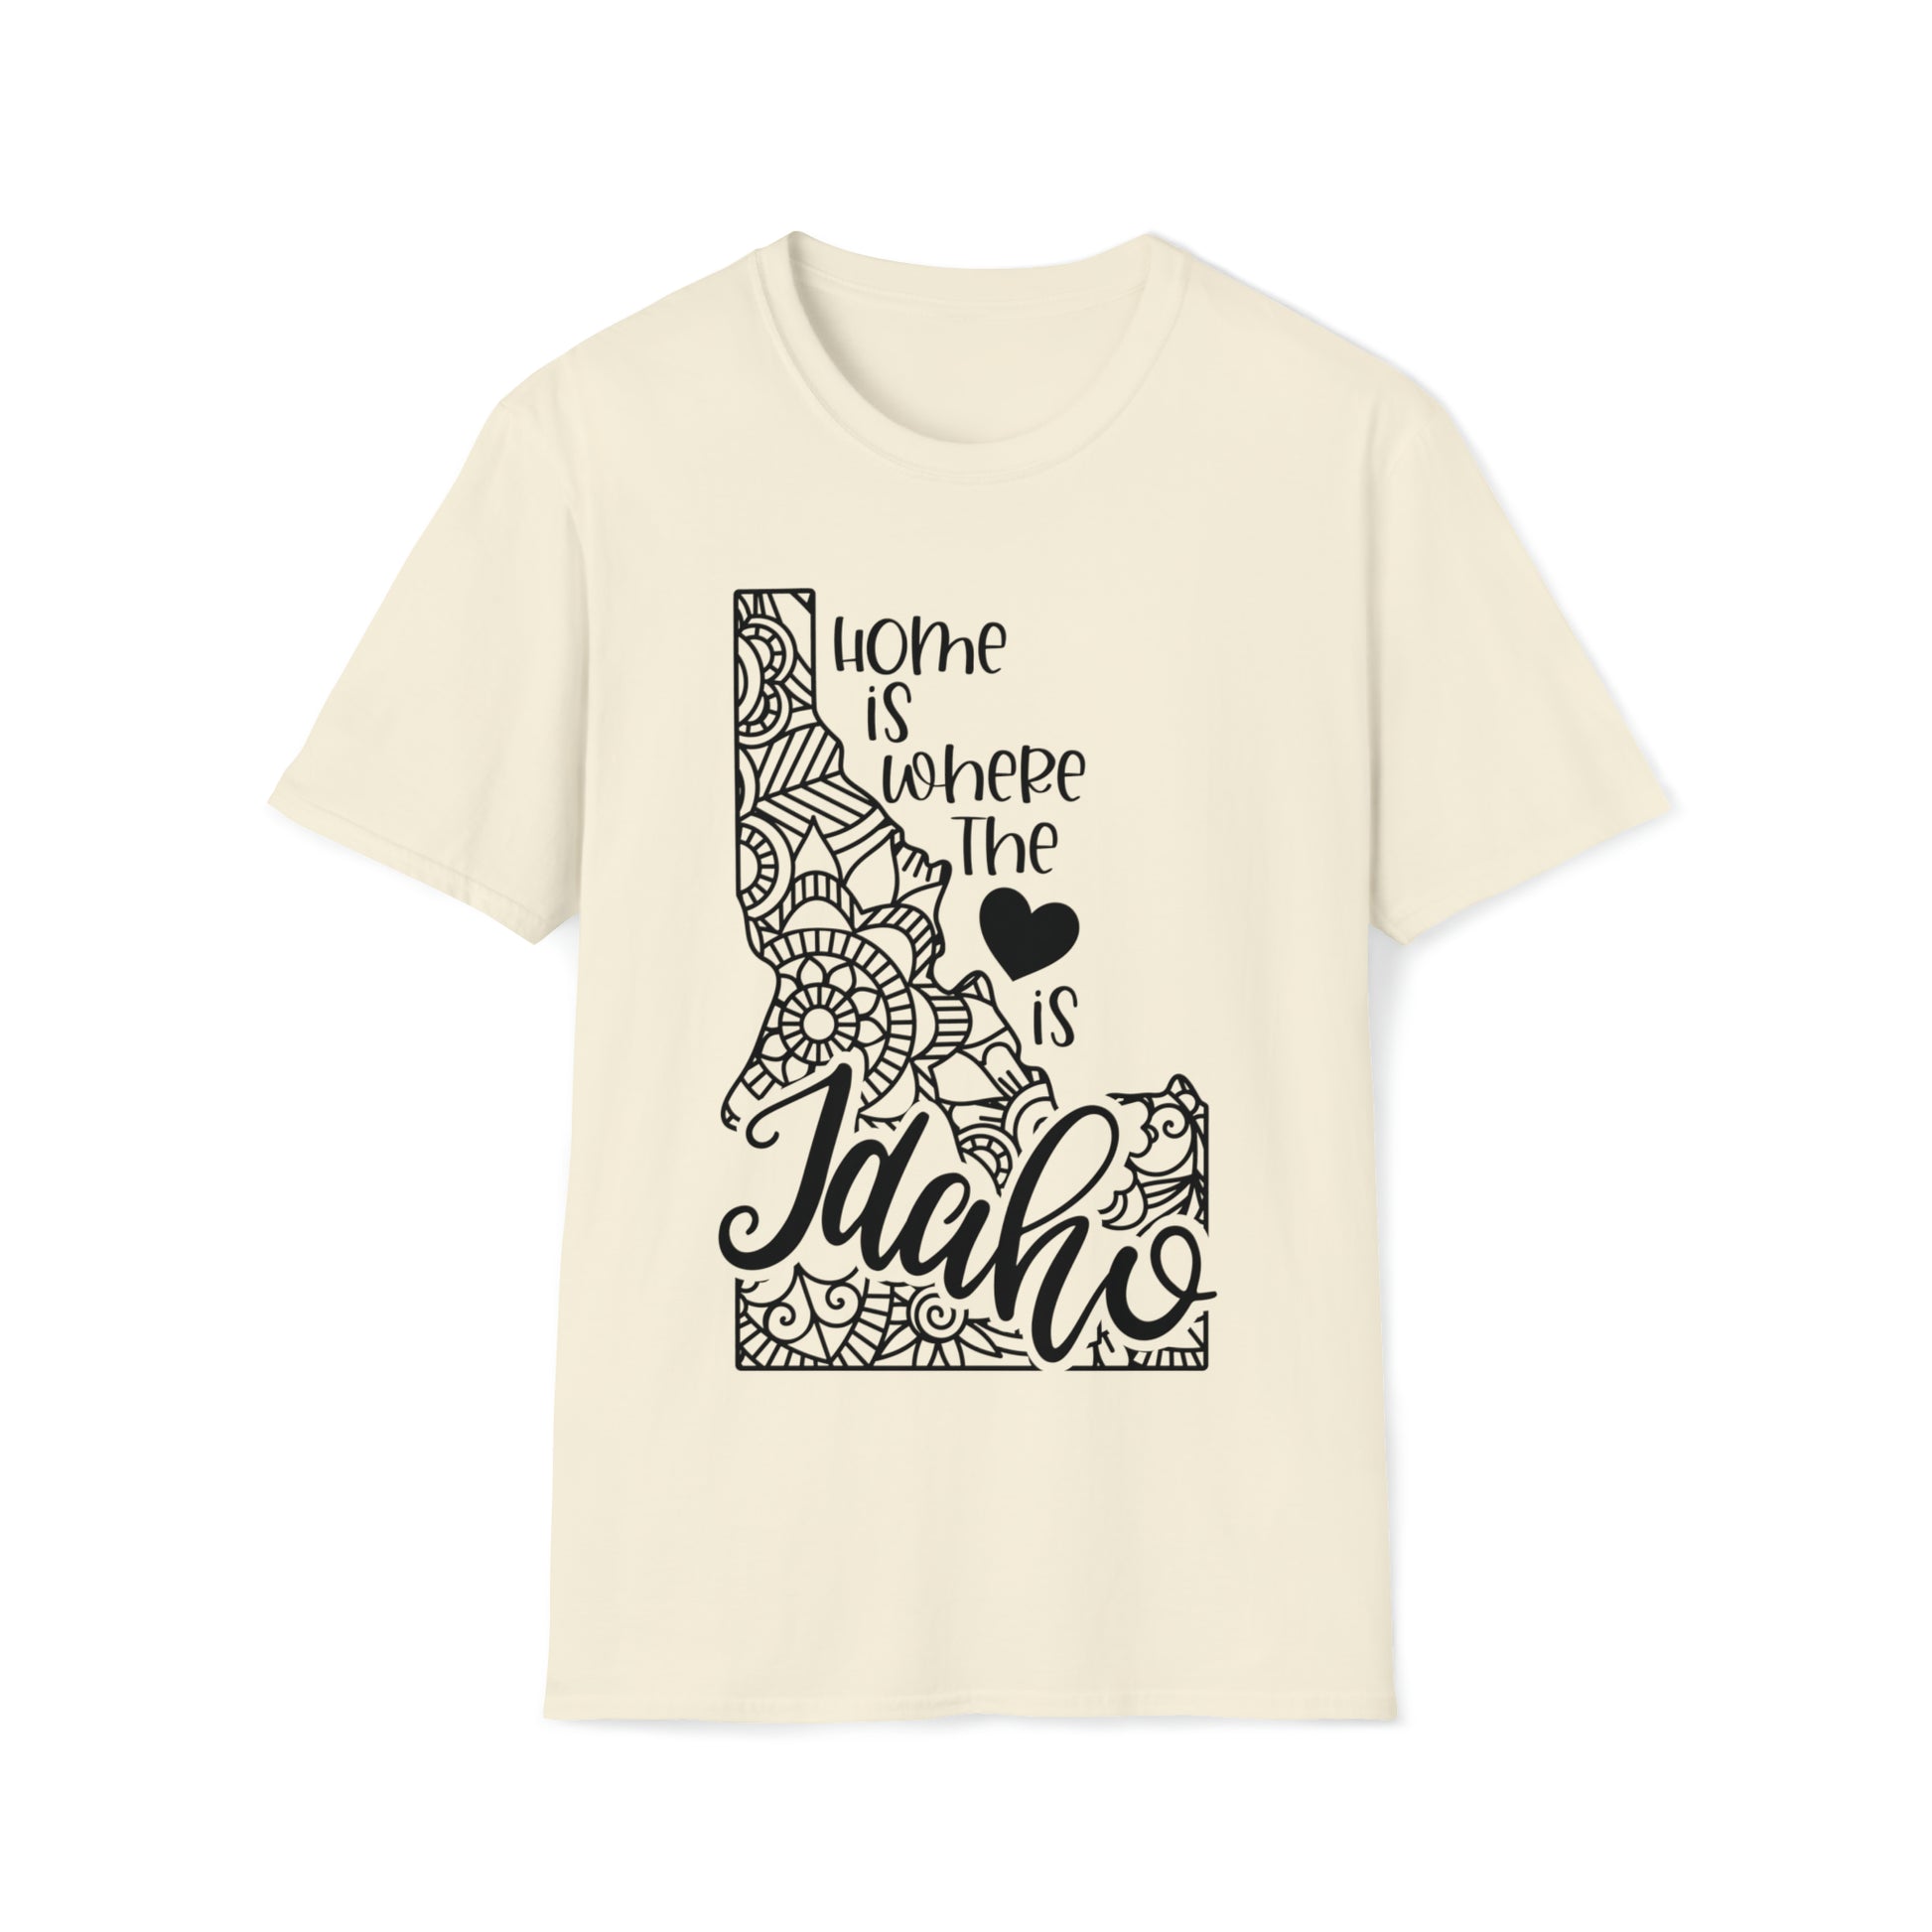 Idaho is Where the Heart is T-Shirt